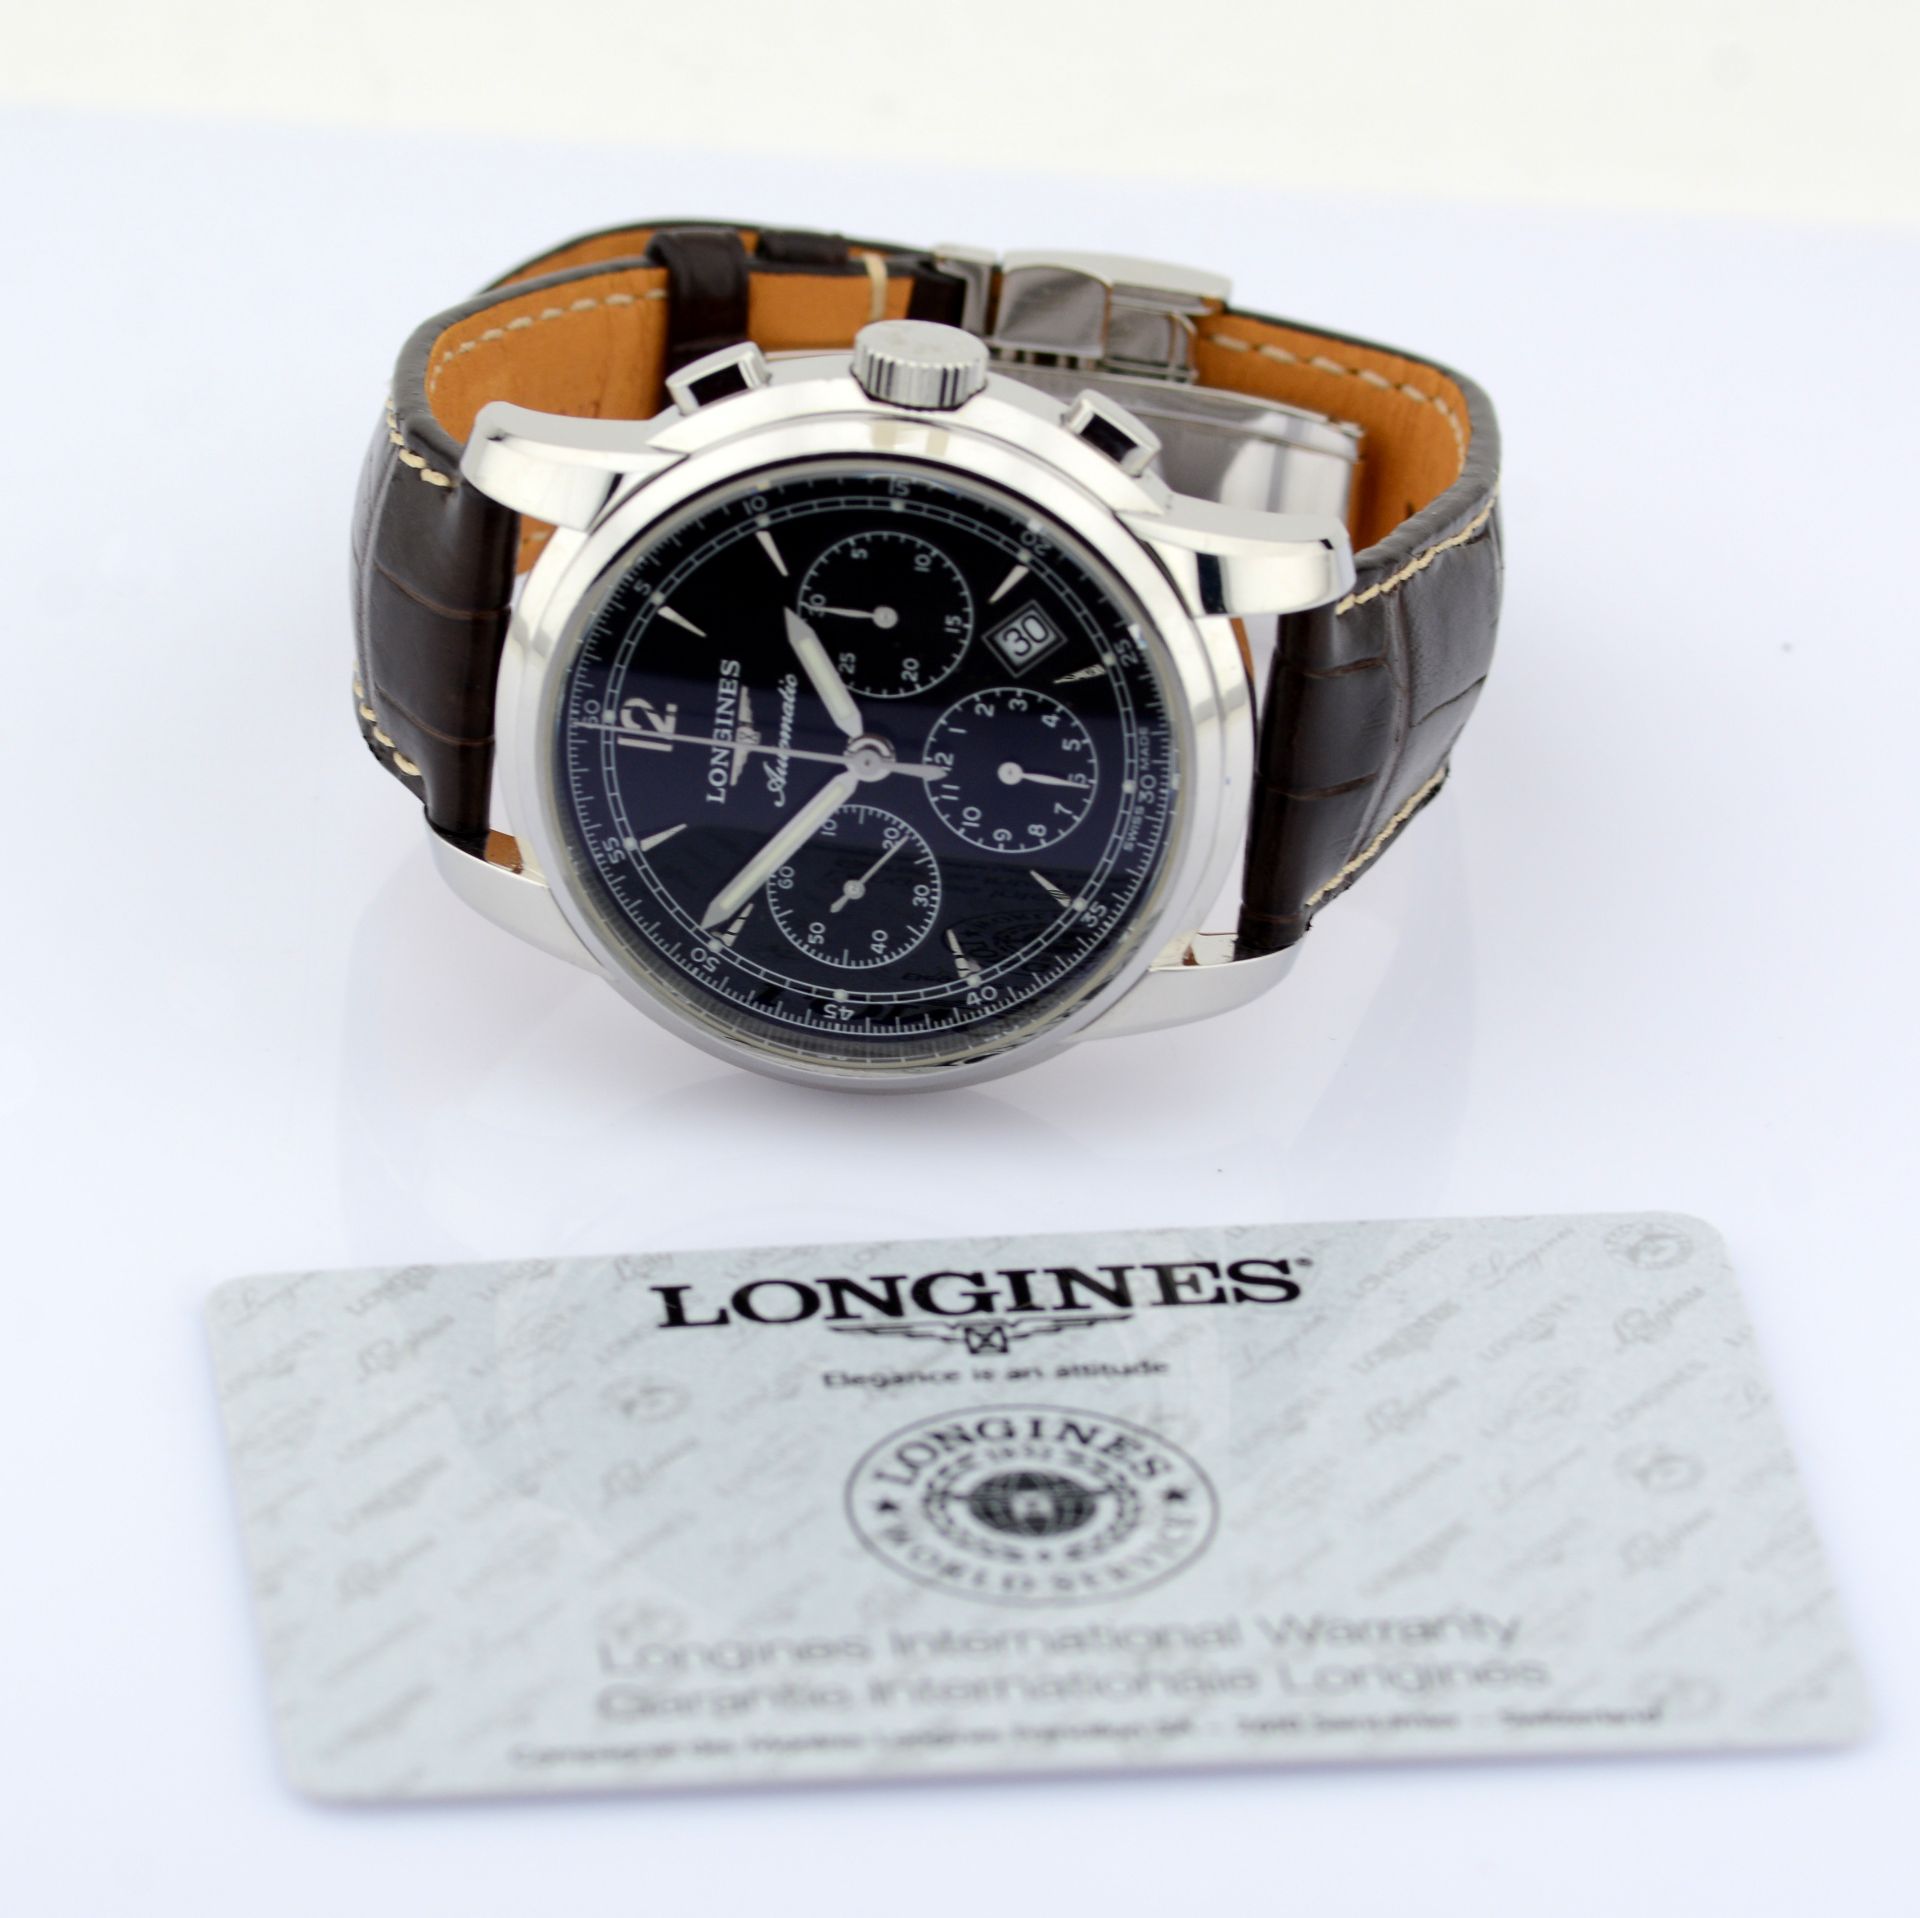 Longines / L2.784.4 Saint-Imier Collection Chronograph Automatic - Gentlmen's Steel Wrist Watch - Image 4 of 10